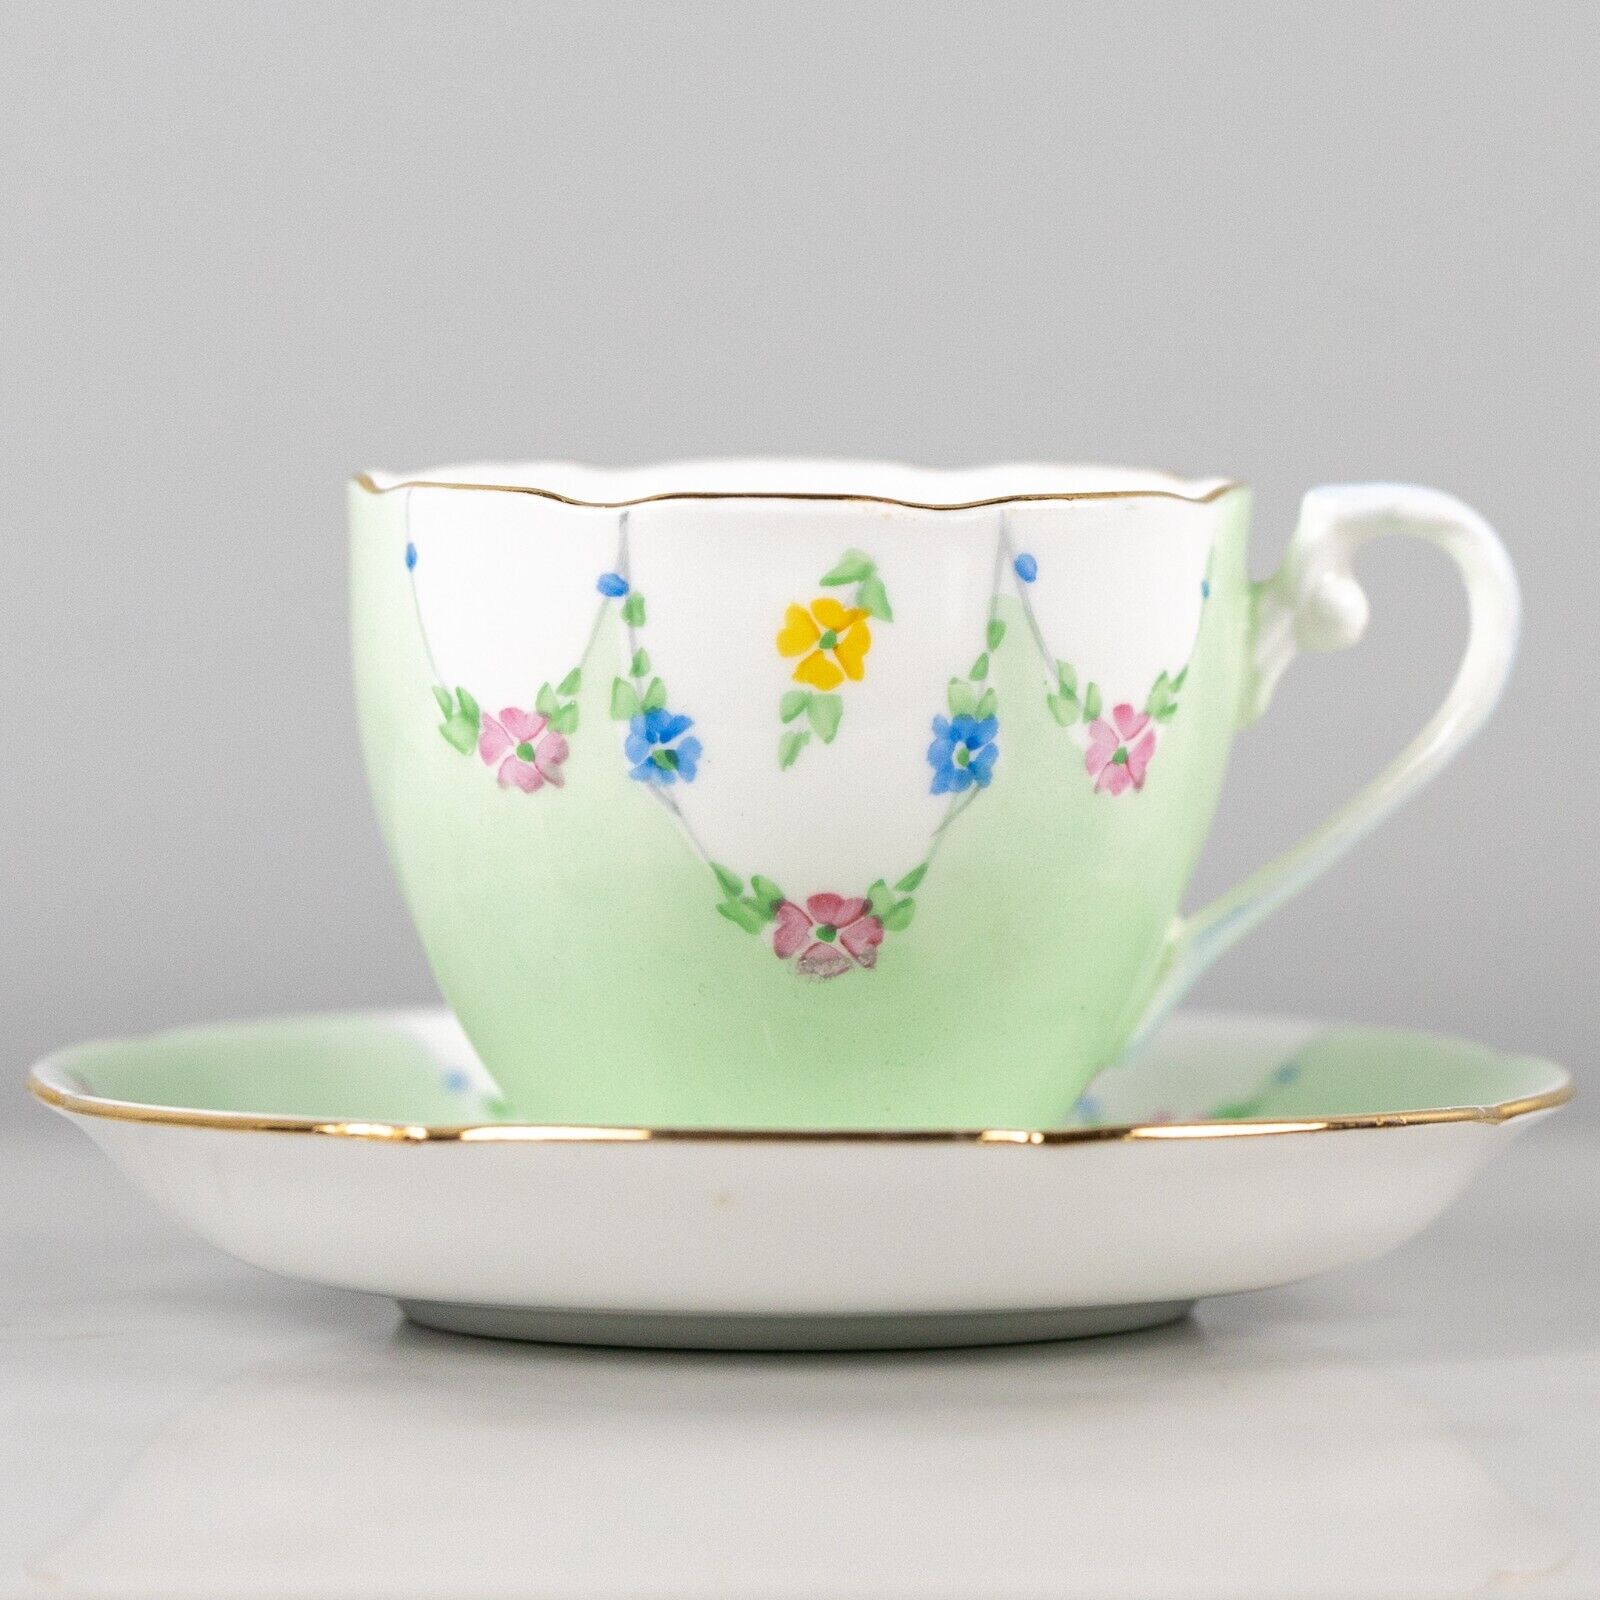 Vtg Royal Grafton Fine Bone China Tea Cup & Saucer Mint Green Floral Smiley Face